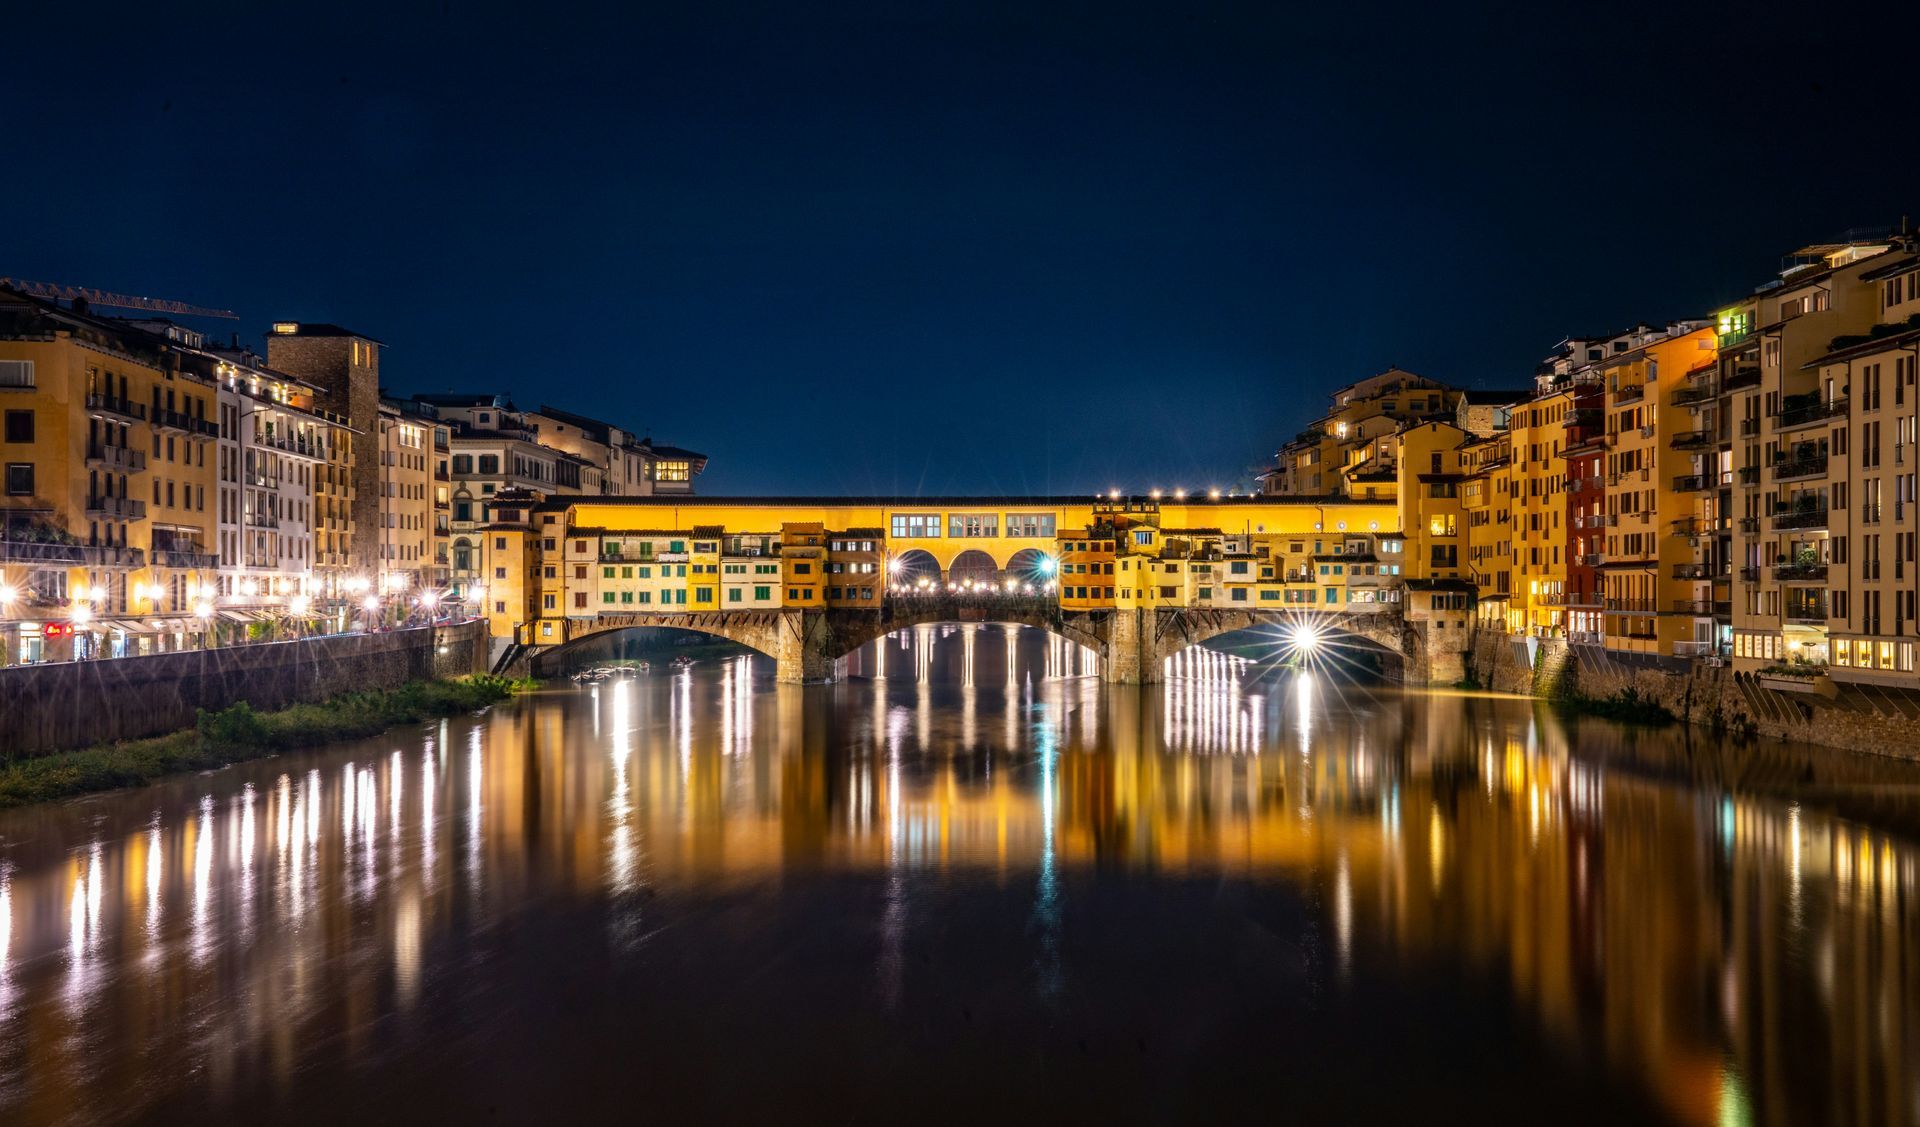 The Ponte Vecchio at Night